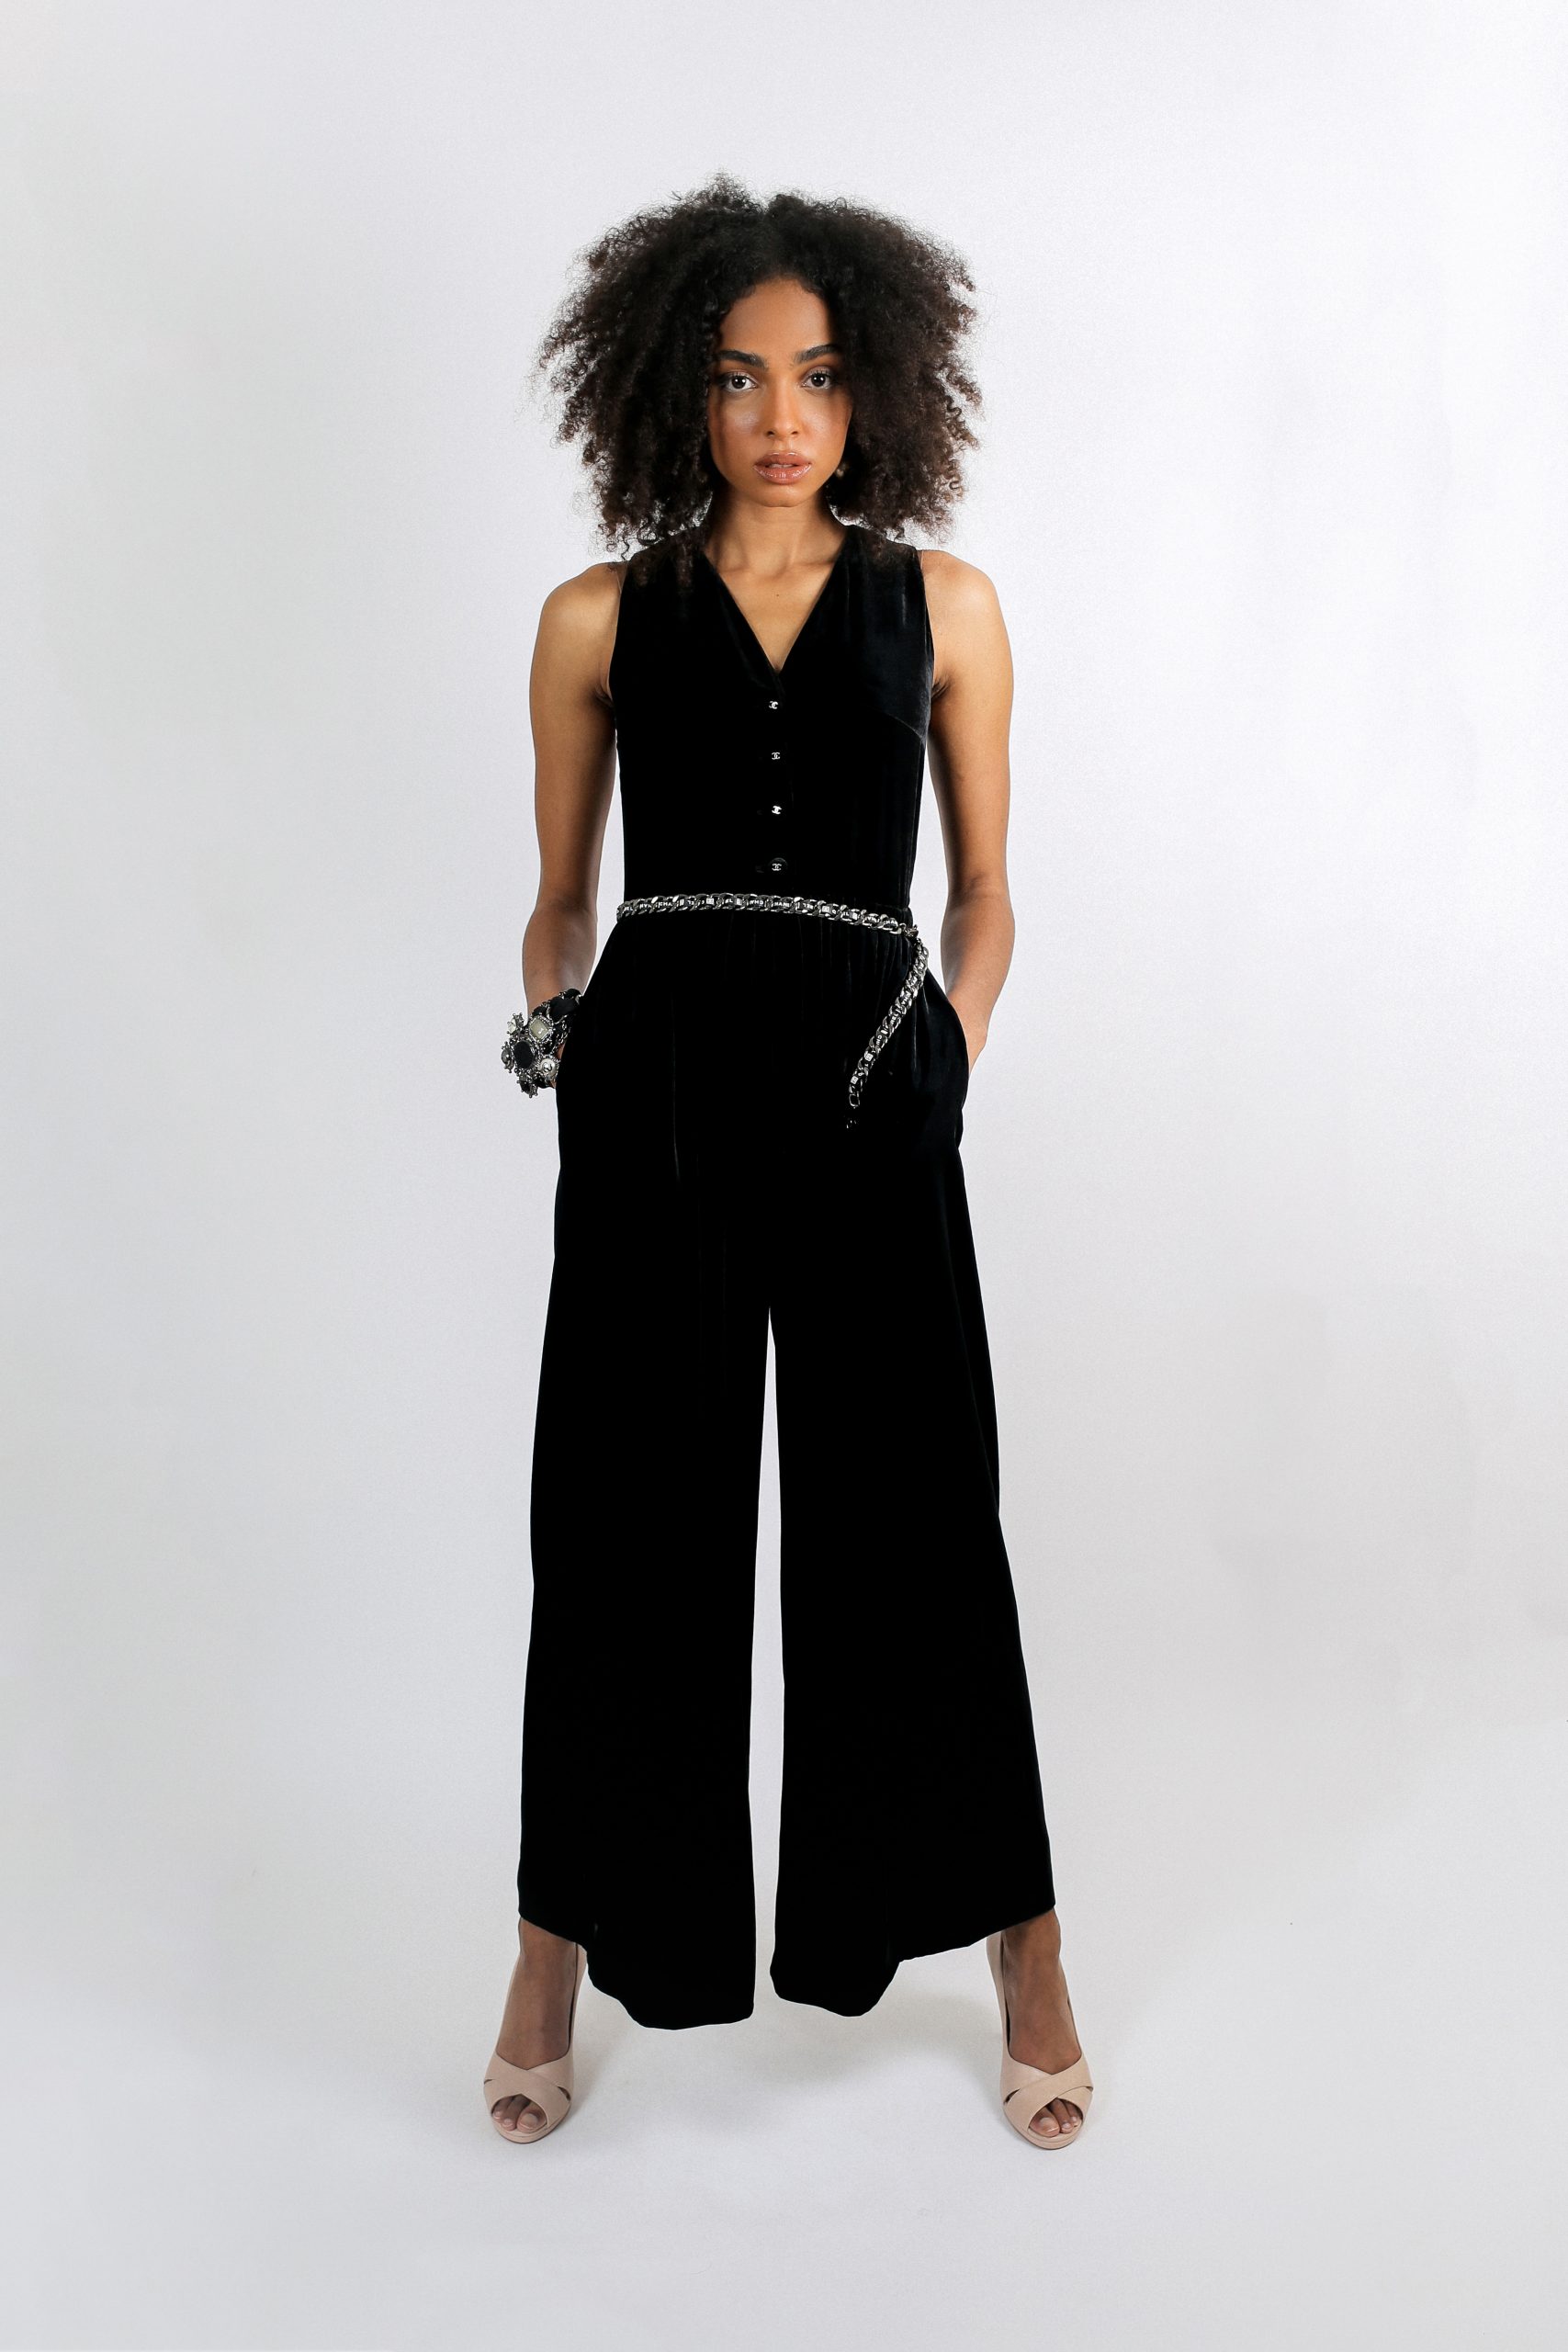 Black Velvet Jumpsuit from Chanel available on www.iconicitems.paris